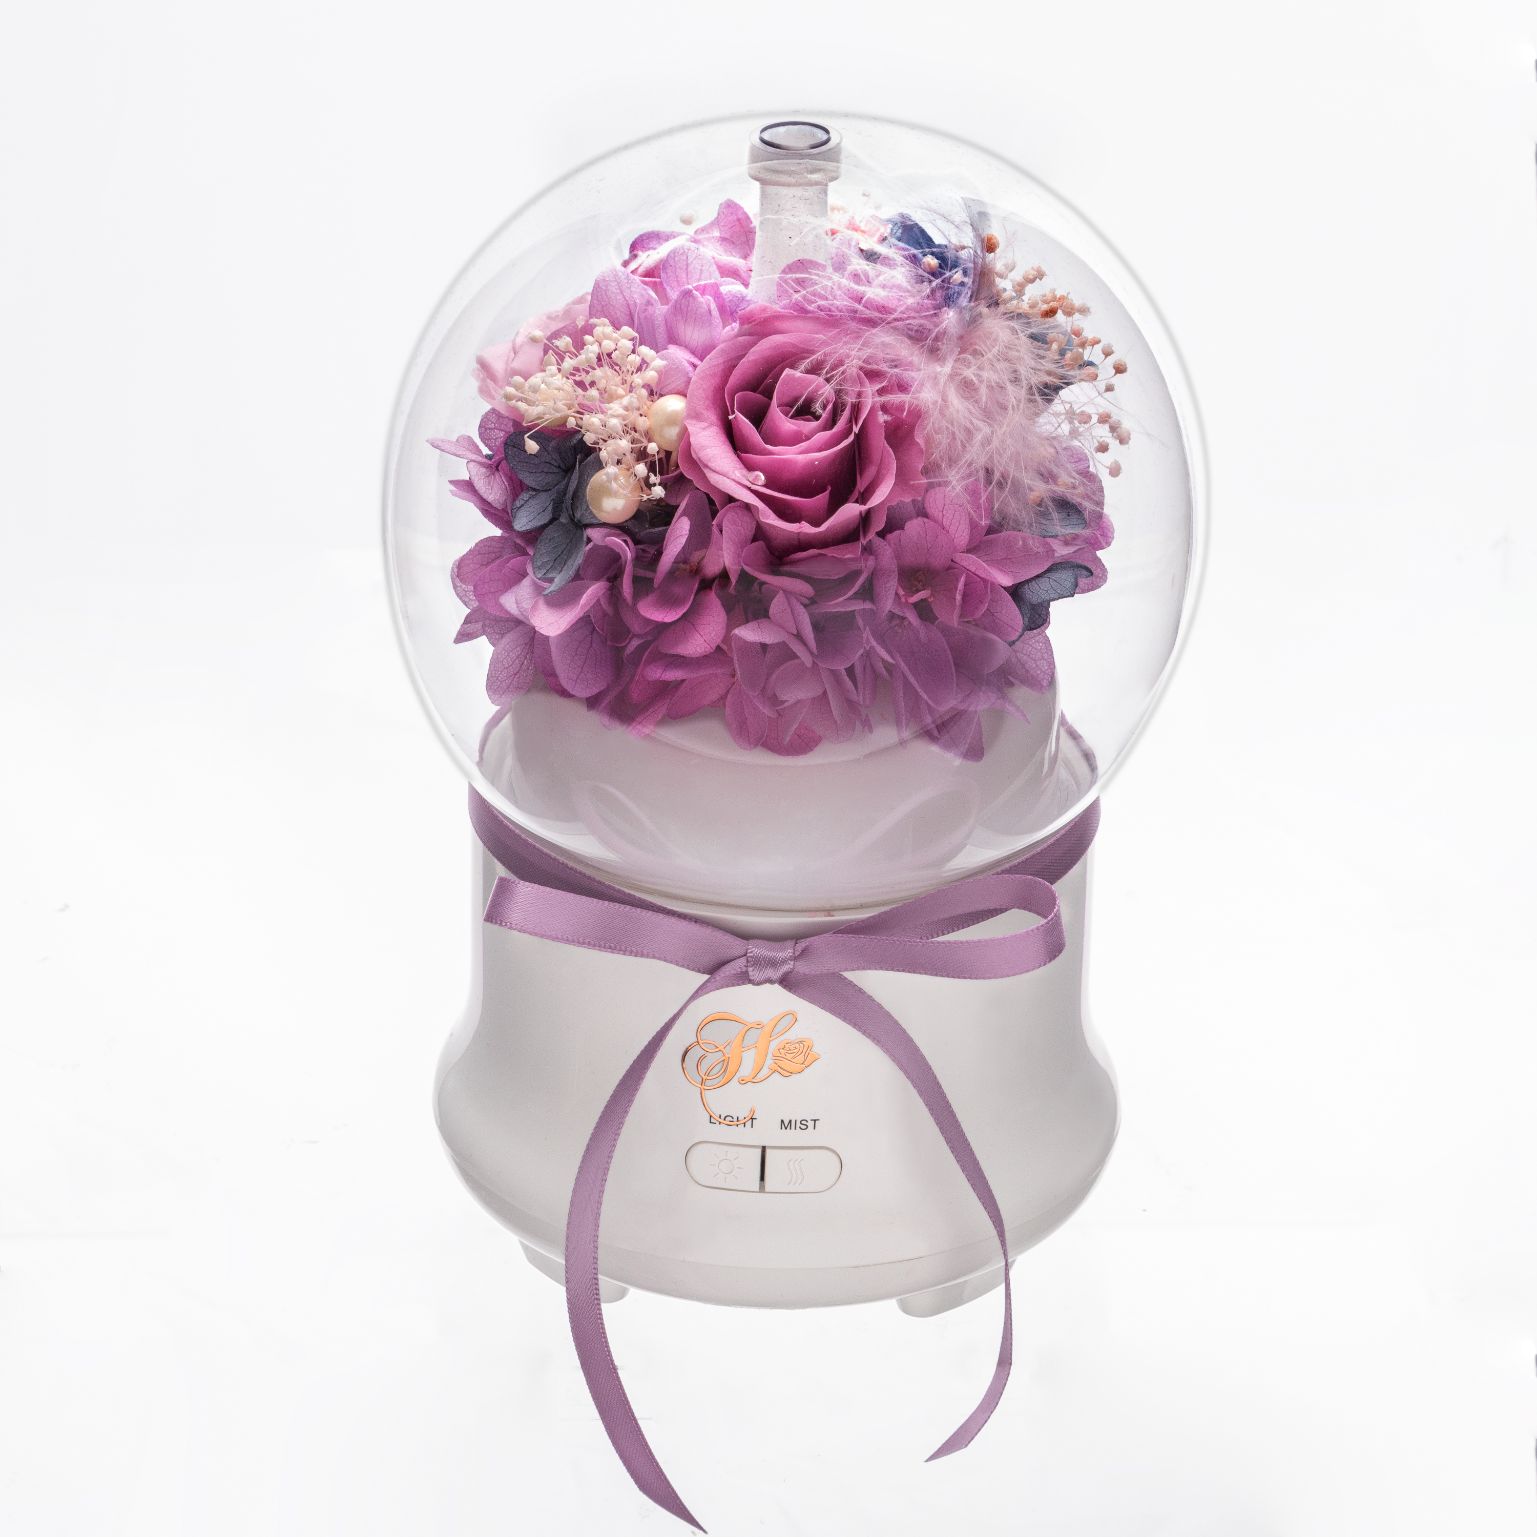 Her Rose Rose Humidifier (Light Purple + White)